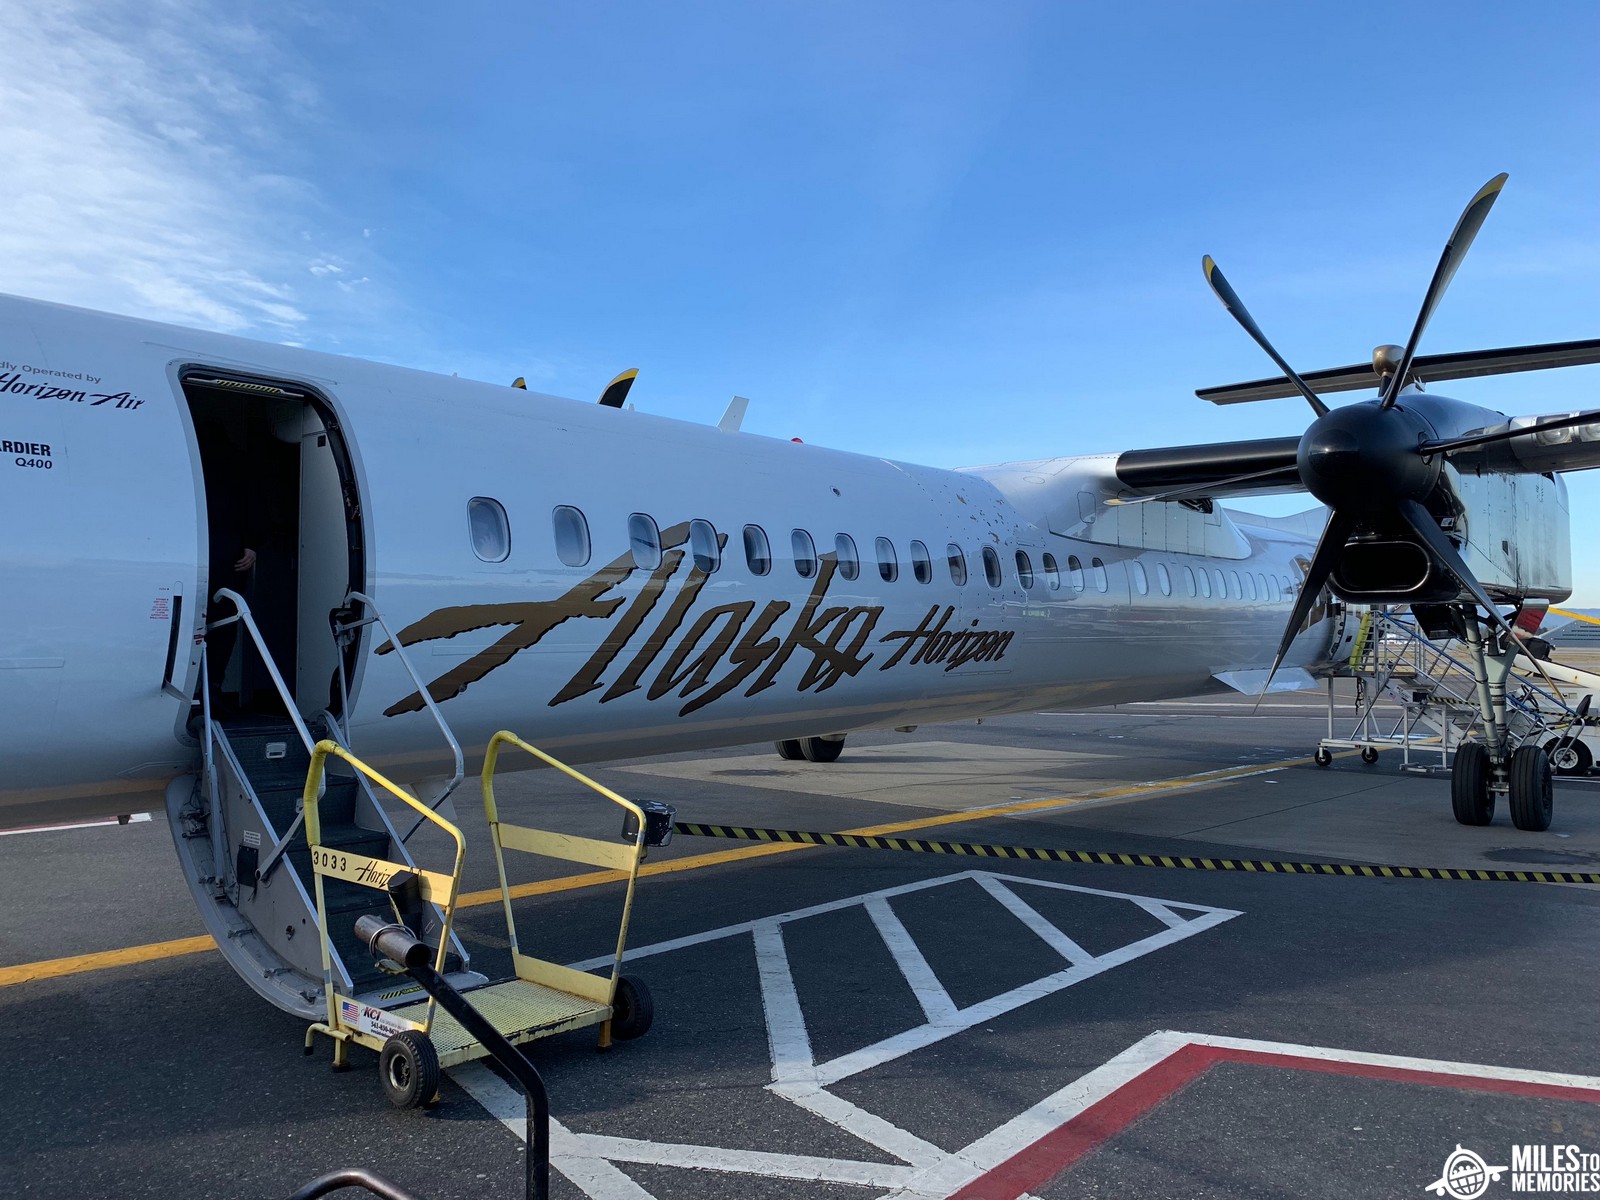 Alaska Airlines Visa Business